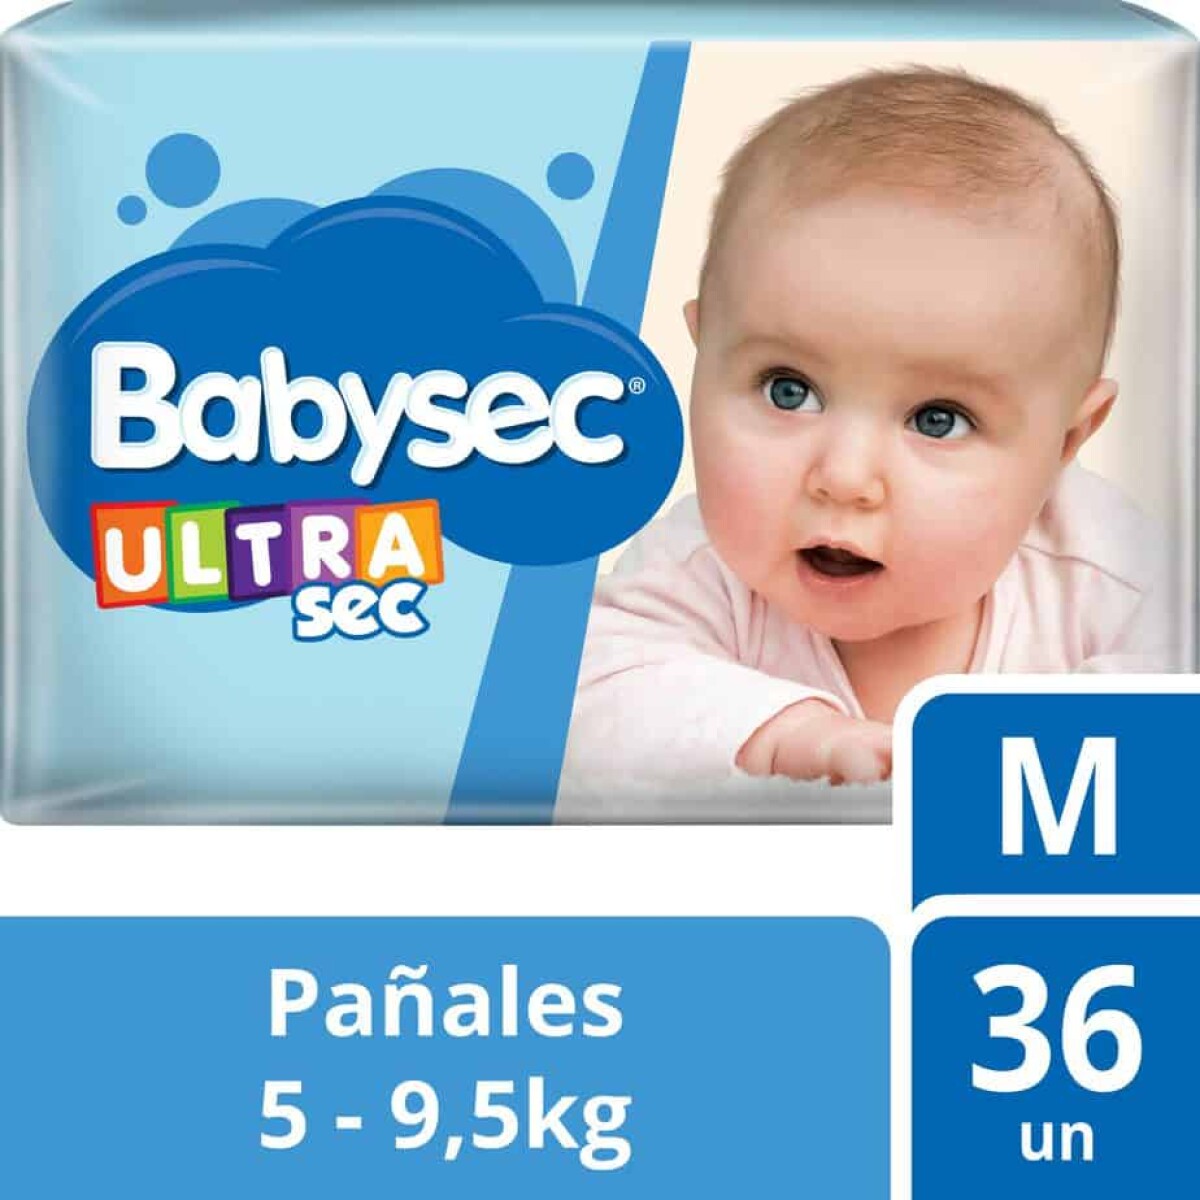 Pañales Babysec Ultrasec M X 34 